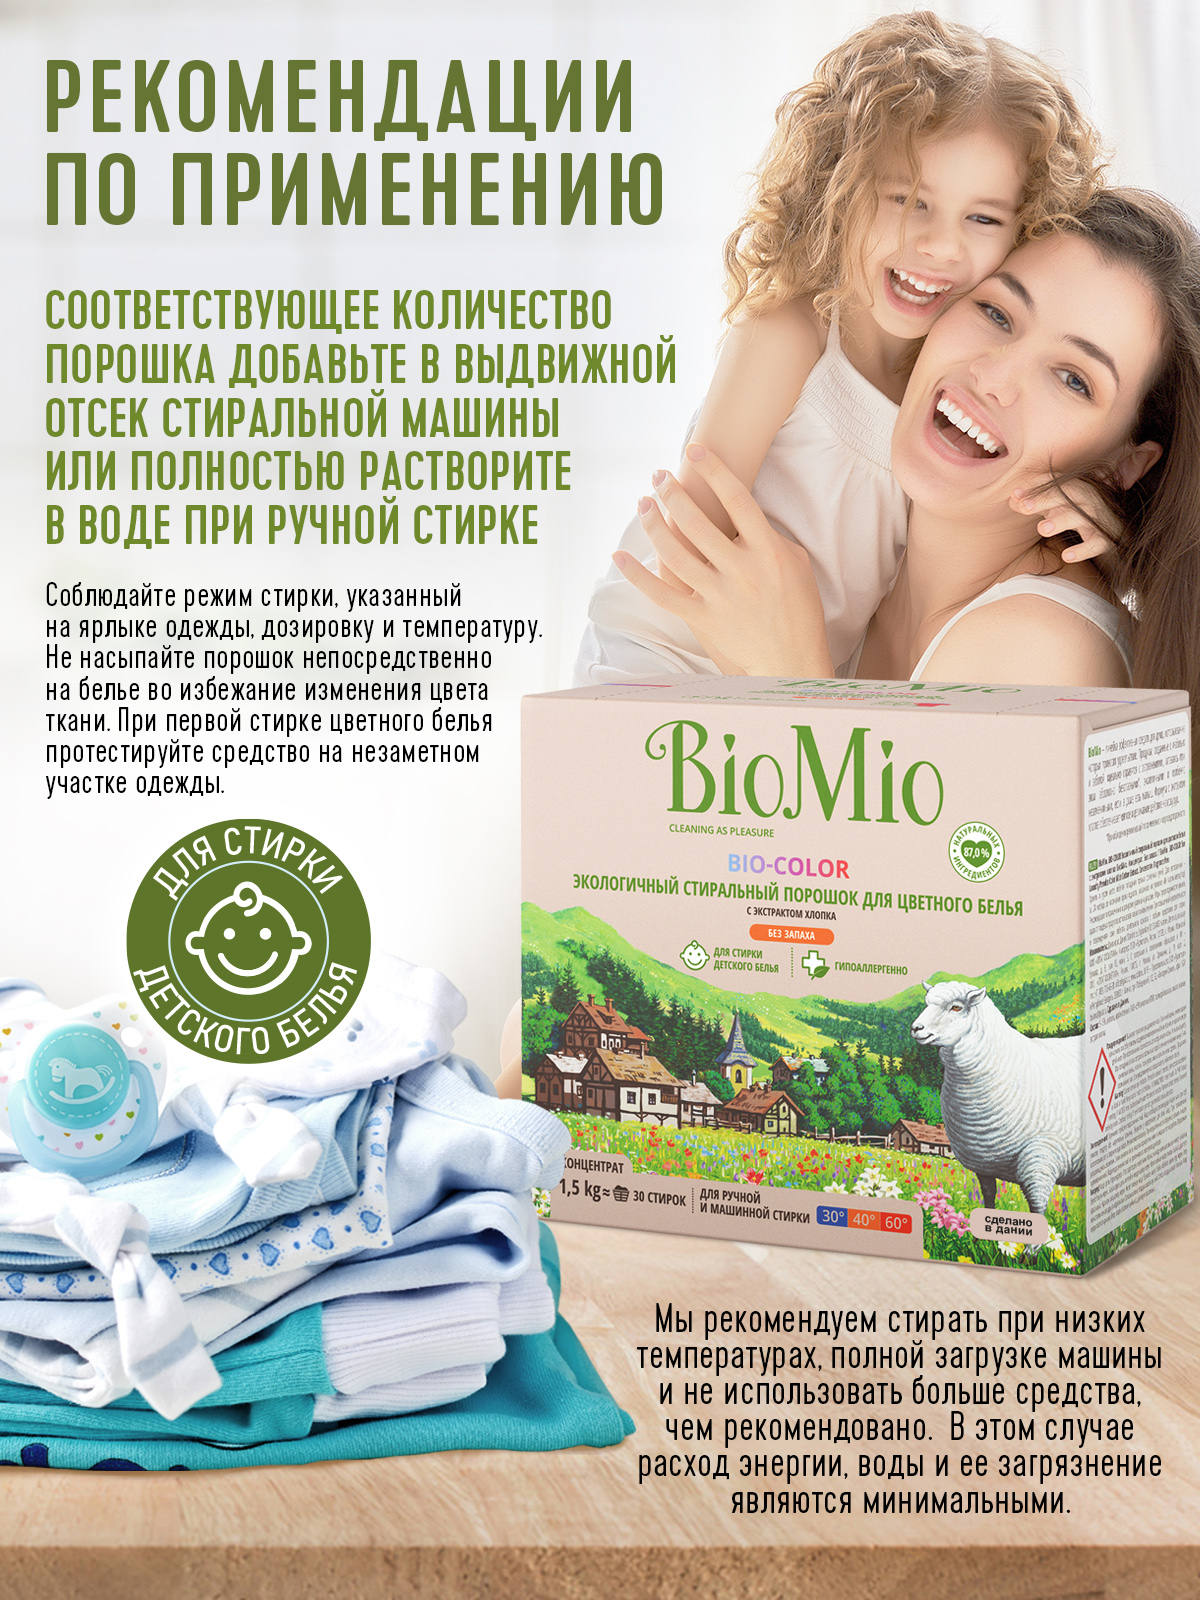 Пральний порошок для кольорової білизни BioMio Bio-Color, концентрат, 1,5 кг - фото 6